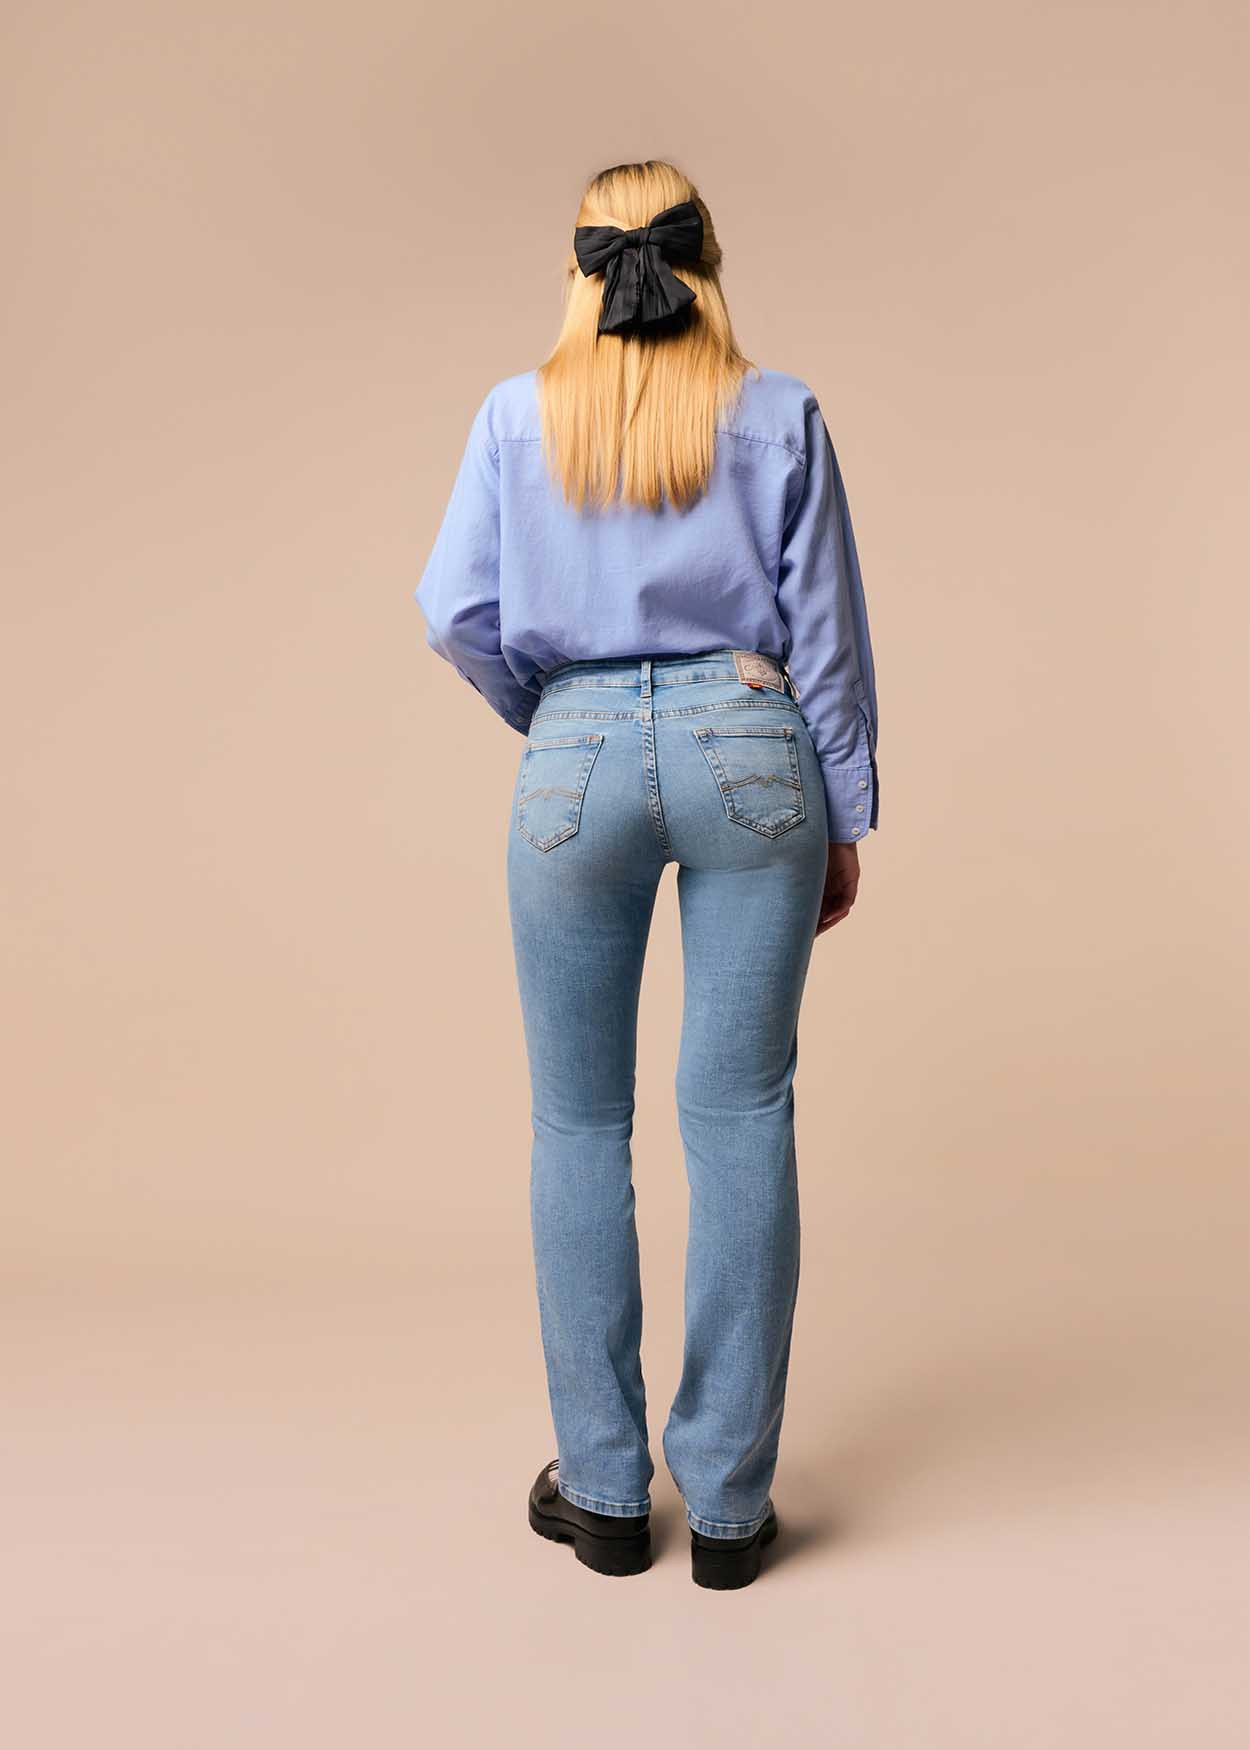 Jeans Claudia-Ariane |Taille naturelle | Taille en pouces Cimarron